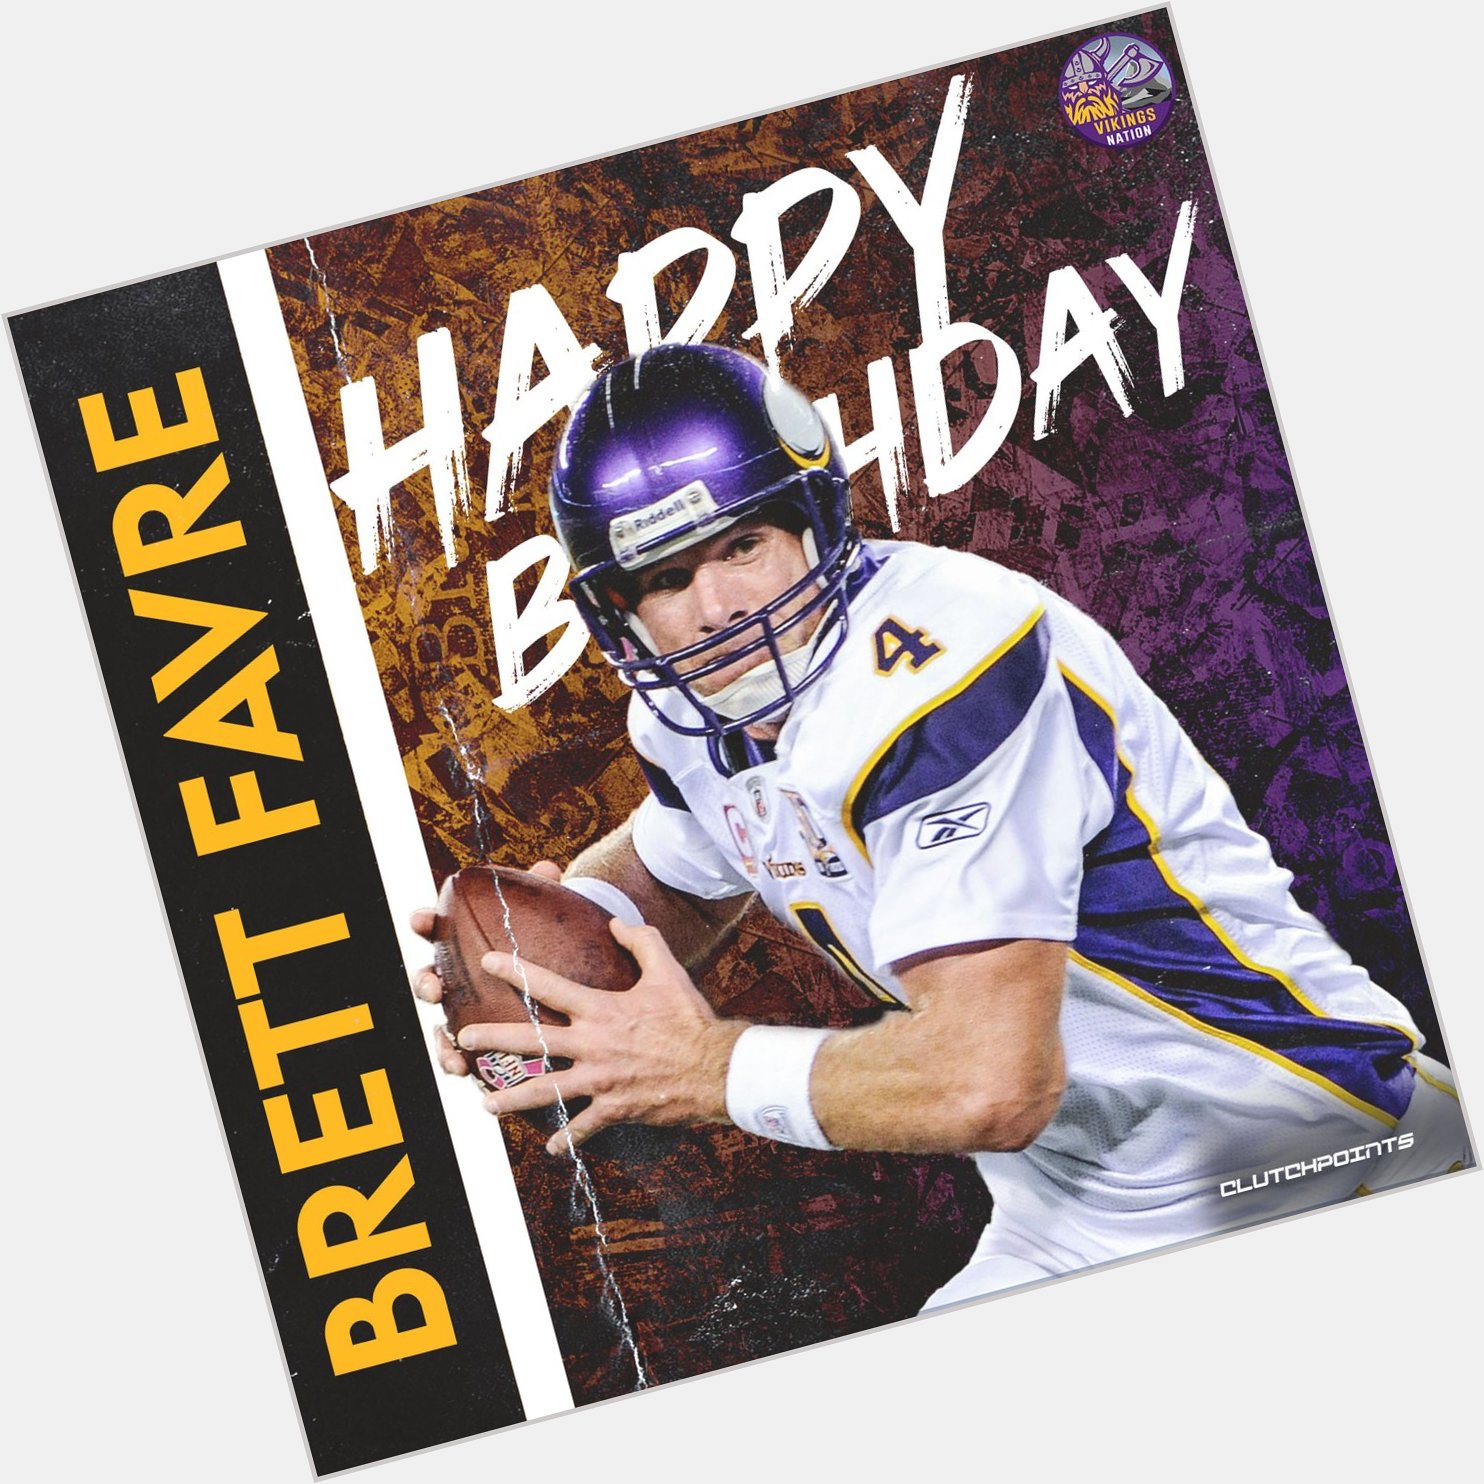 Join us in wishing the gunslinger Brett Favre a happy happy birthday! 